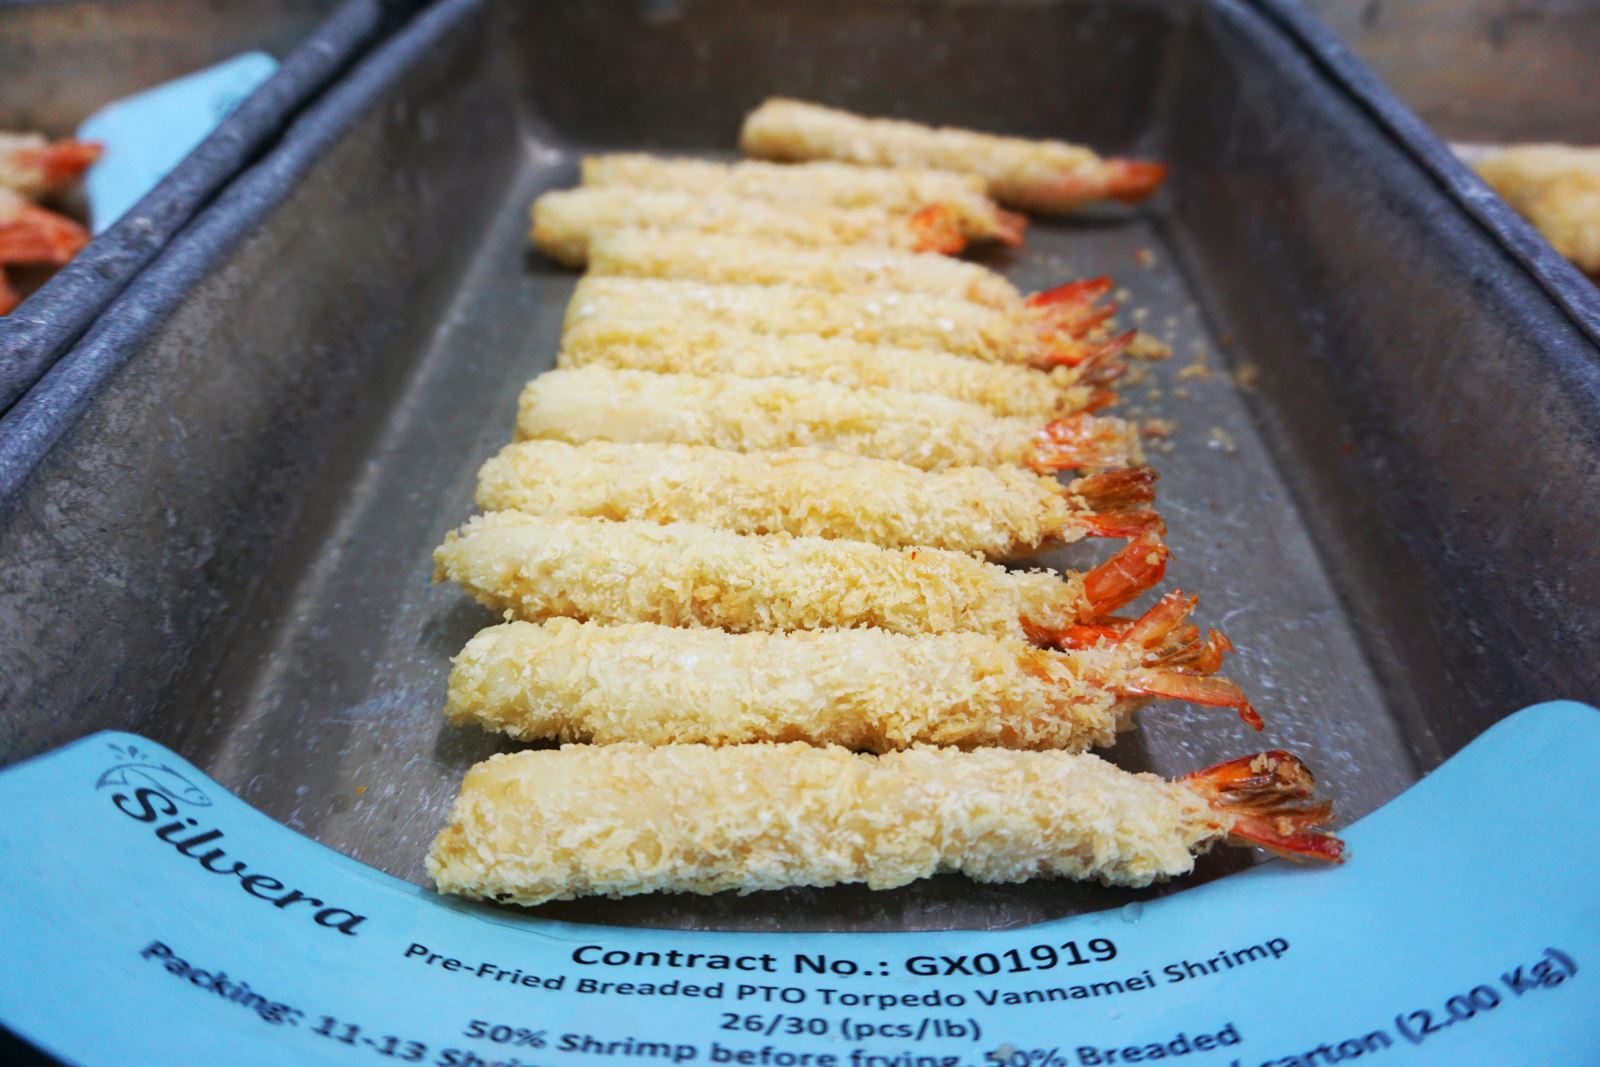 Frozen Pre-fried Breaded Torpedo Vannamei Shrimp